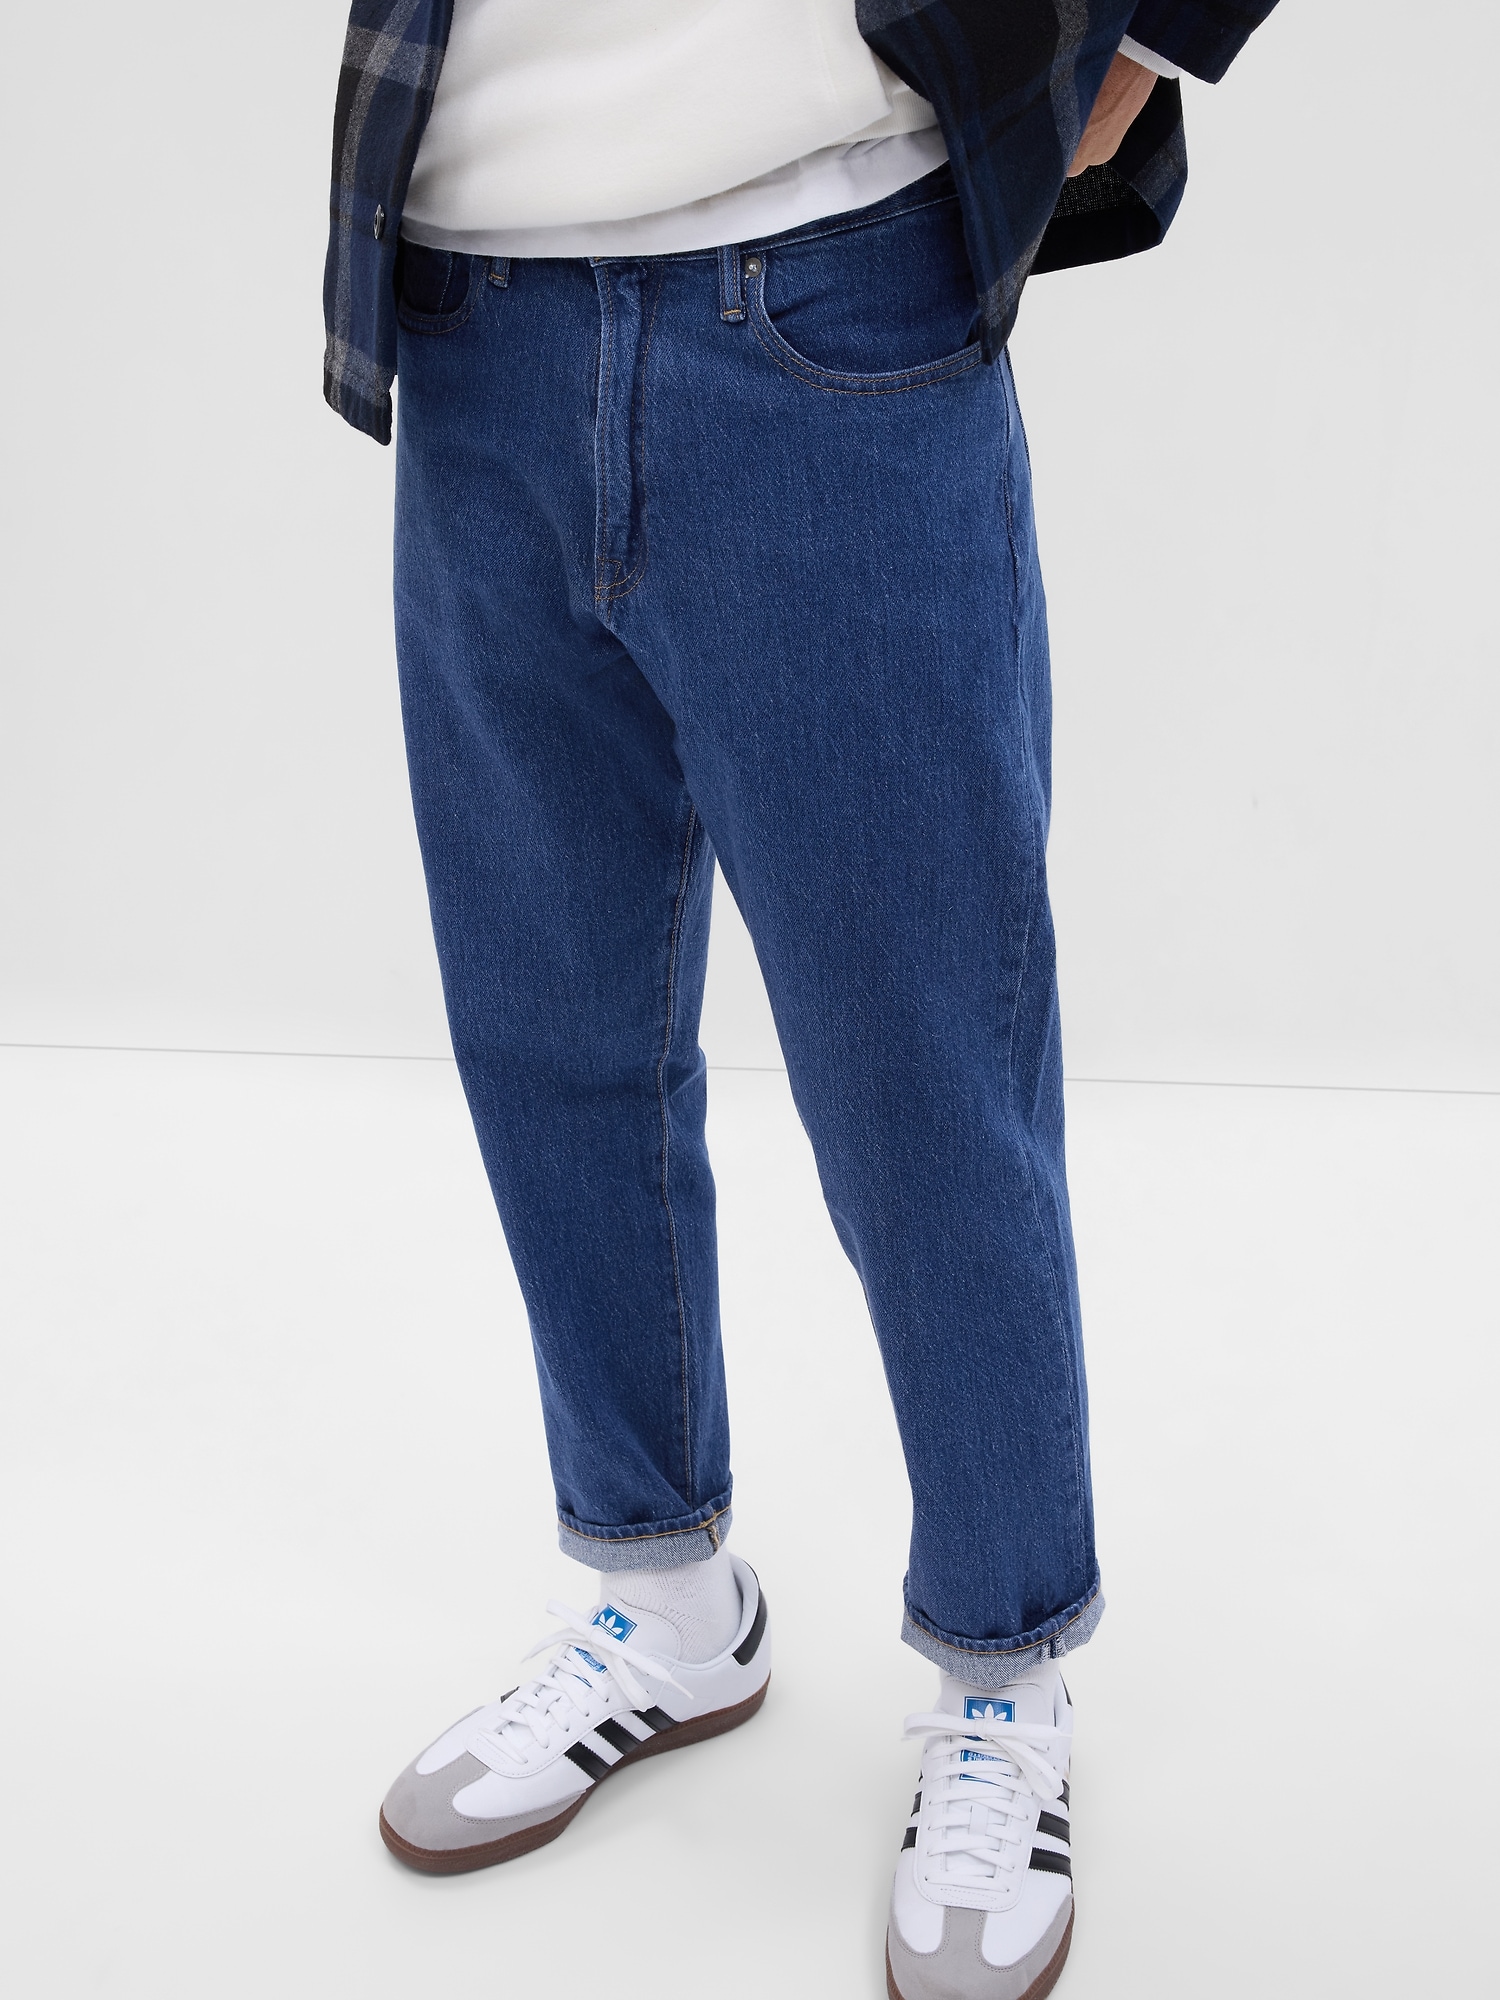 NWT Mens GAP Relaxed Taper GapFlex Denim Pants Jeans Choose Size Worn Medium